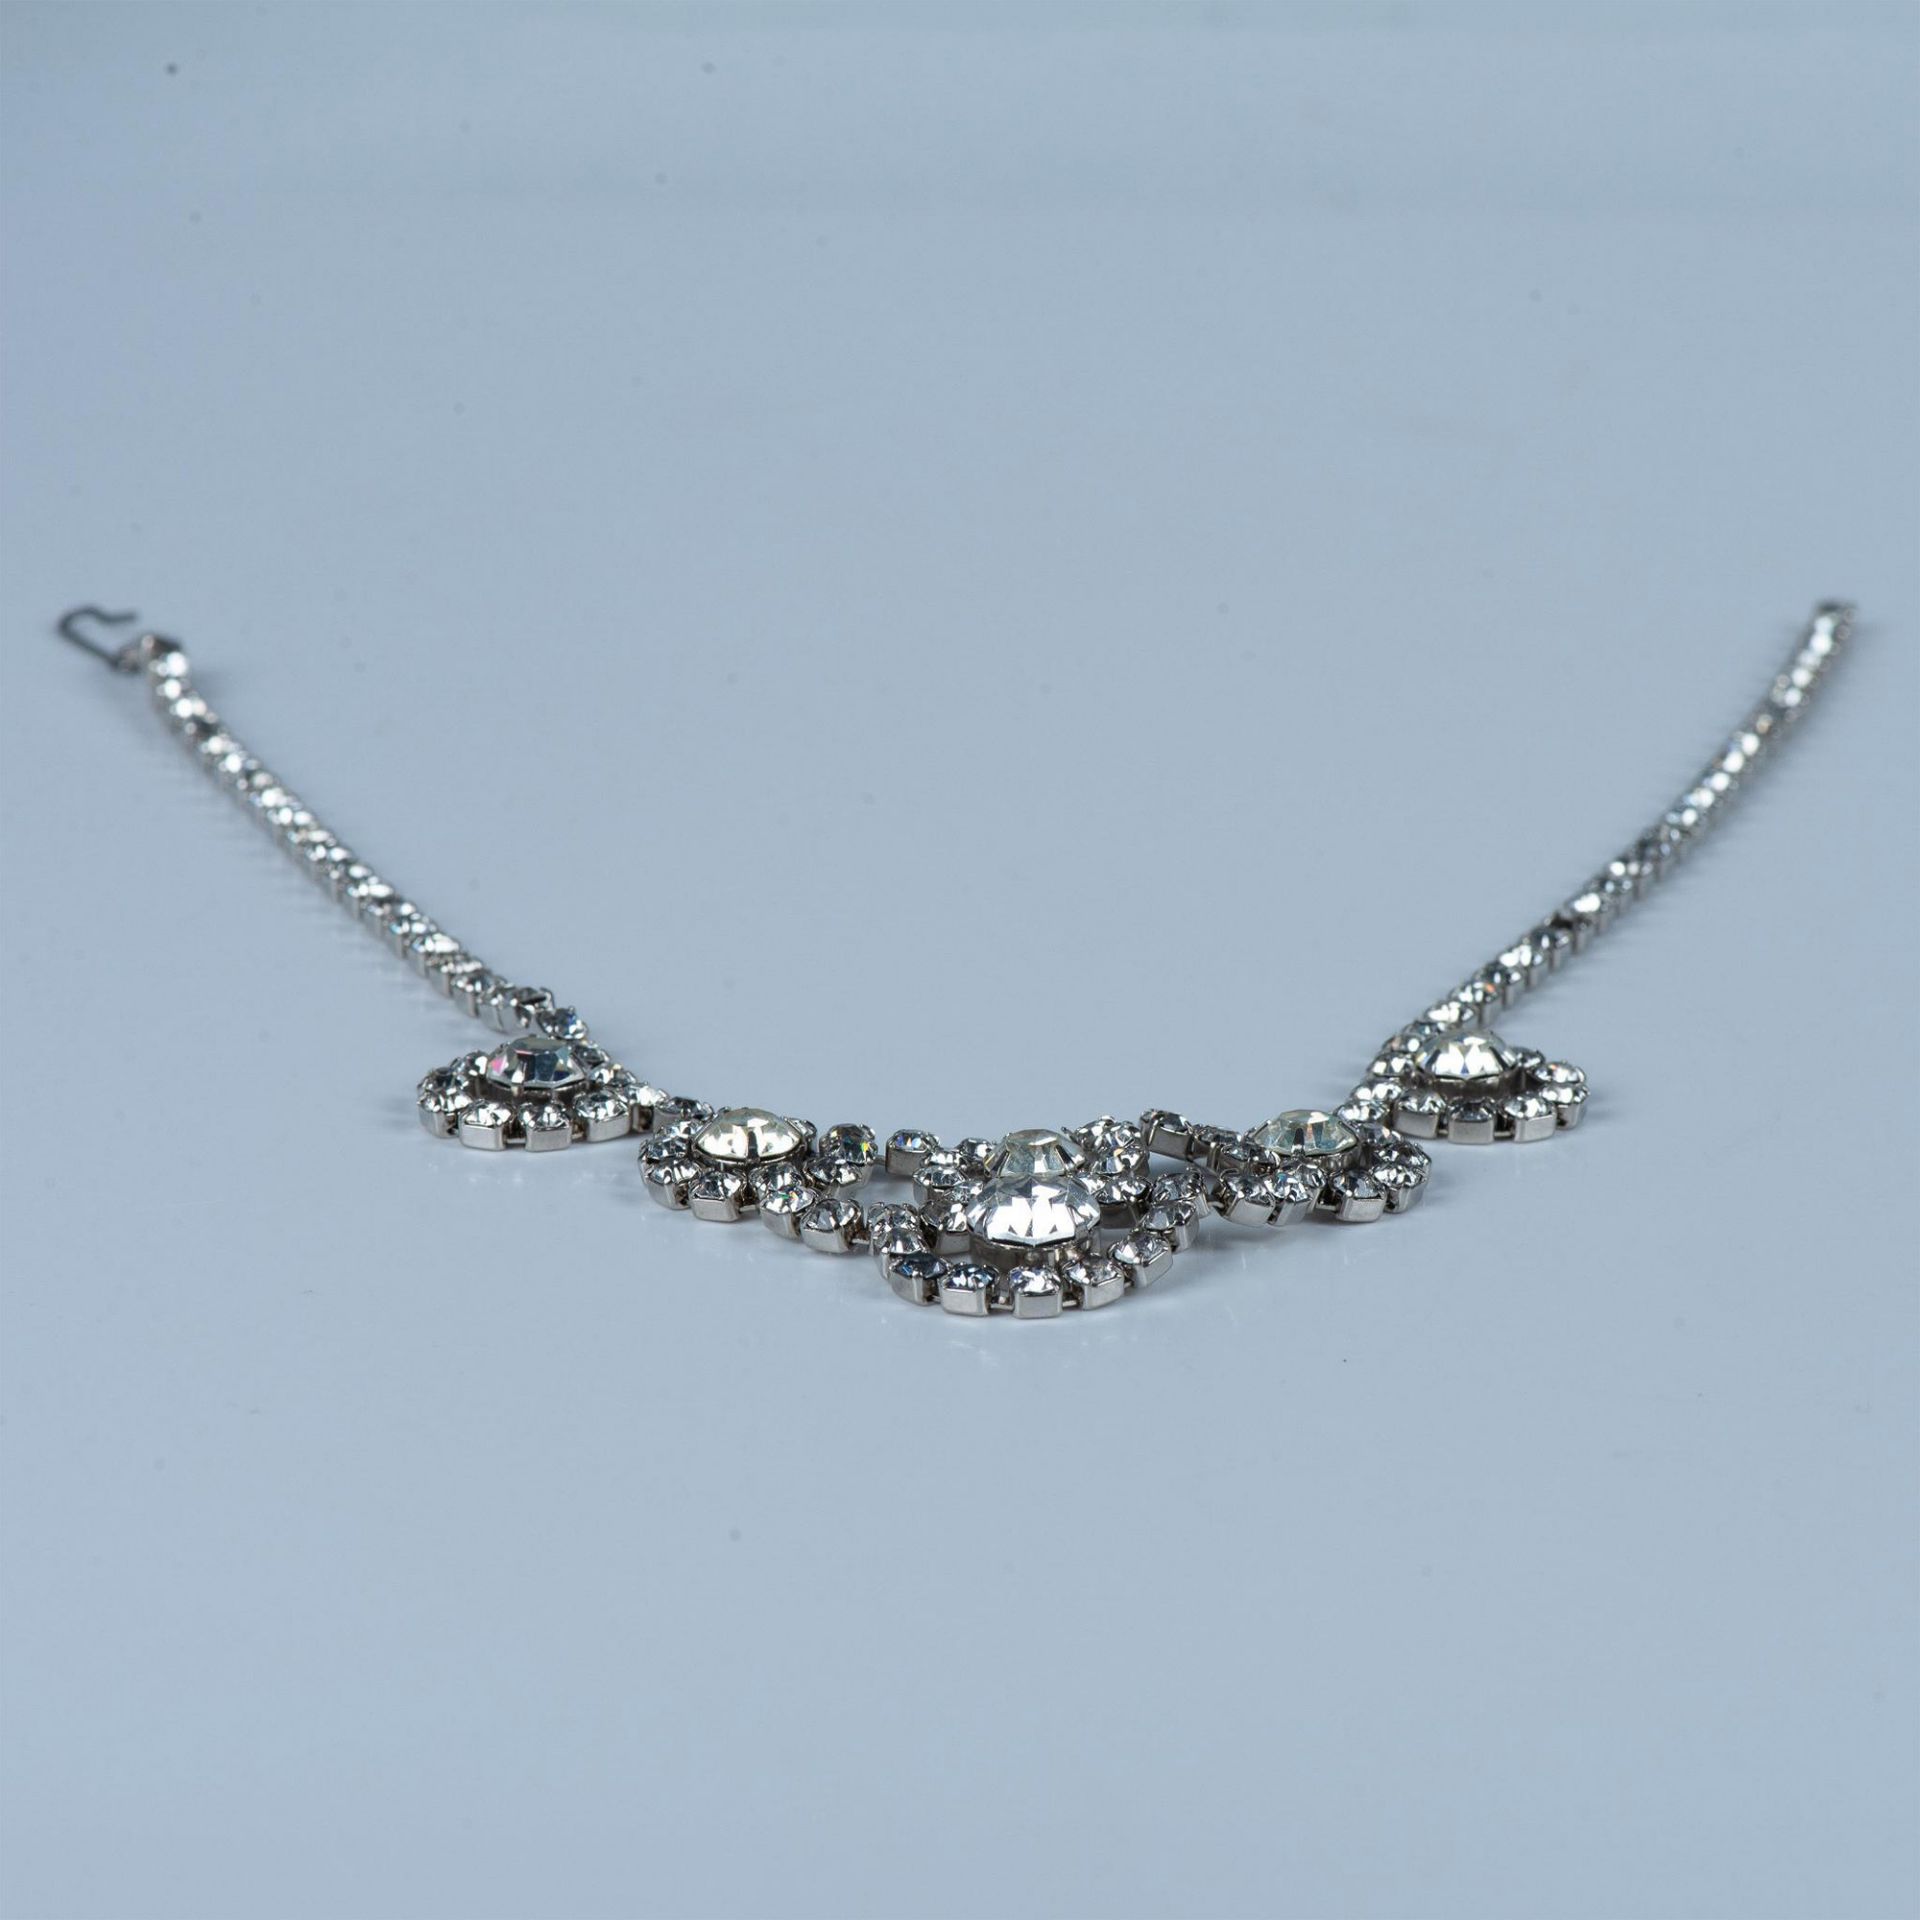 Stunning Silver Metal & Rhinestone Necklace - Image 3 of 7